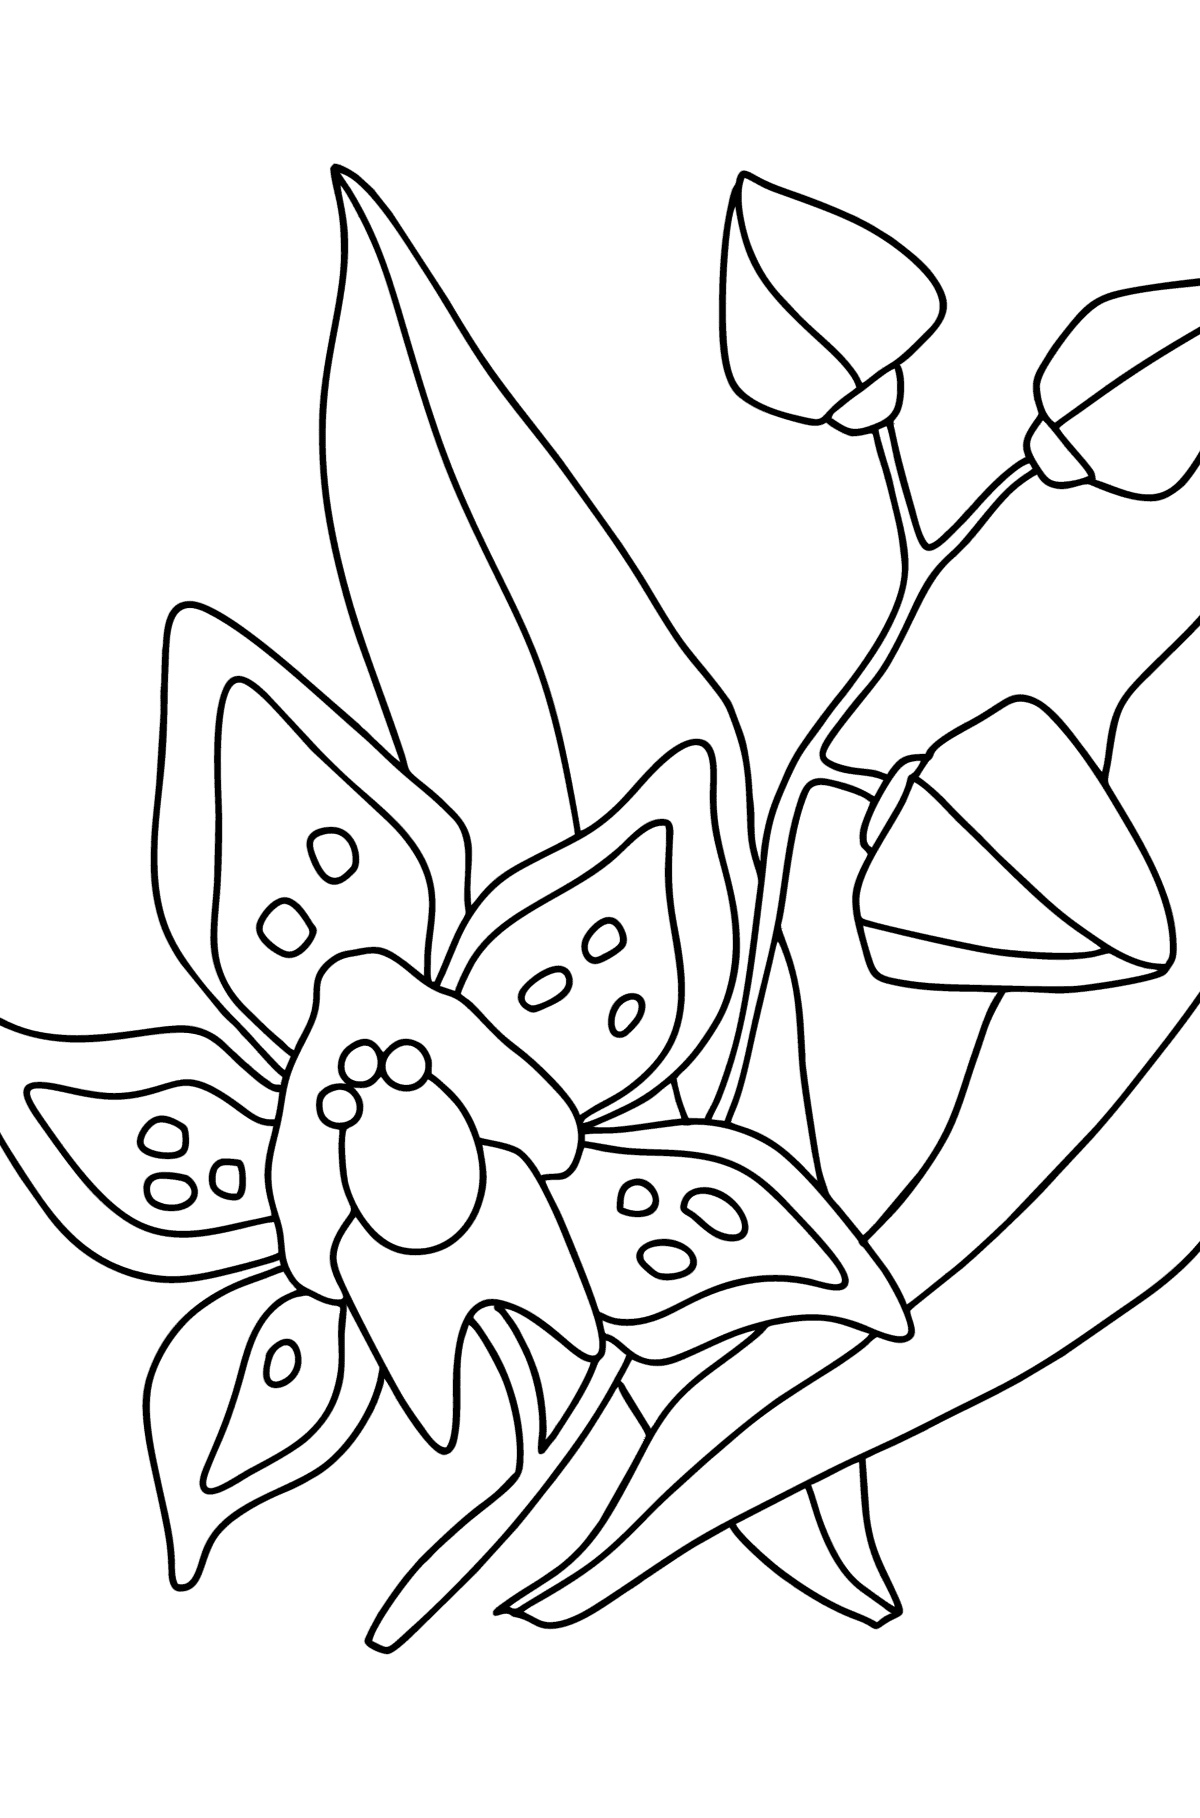 Tegning til fargelegging Orkidé - Tegninger til fargelegging for barn